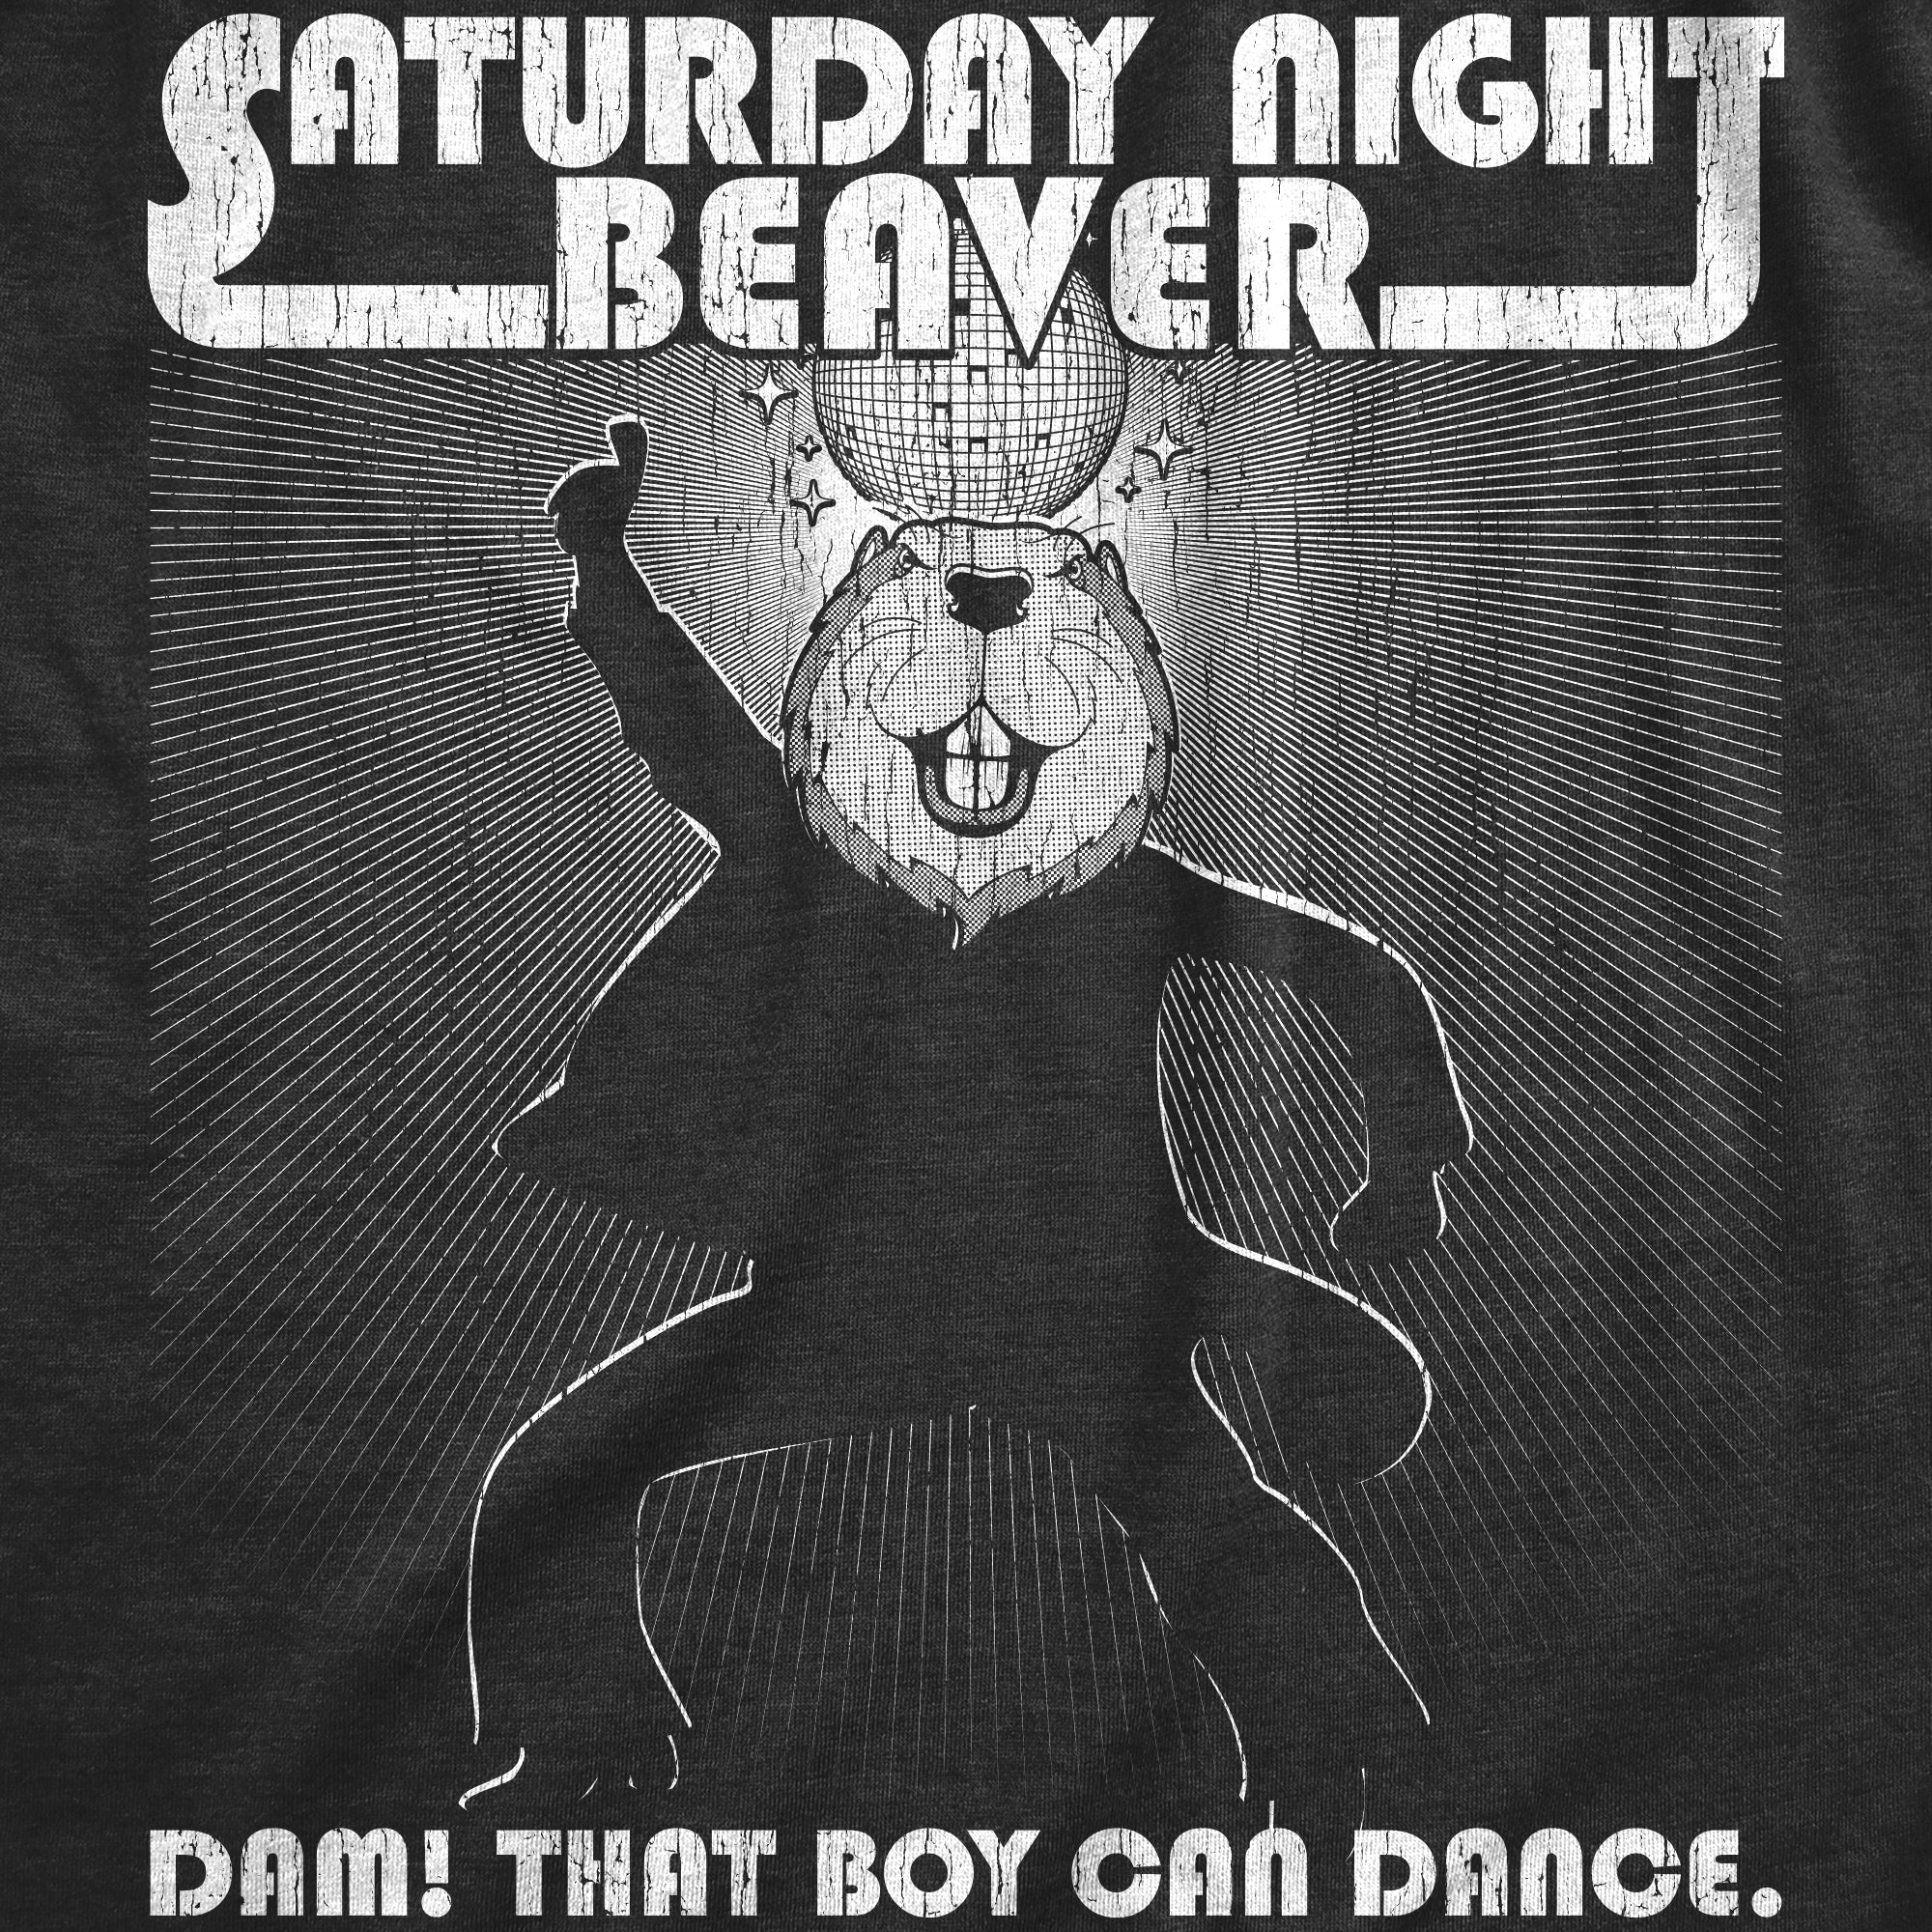 Funny Heather Black - BEAVER Saturday Night Beaver Womens T Shirt Nerdy animal sarcastic Tee